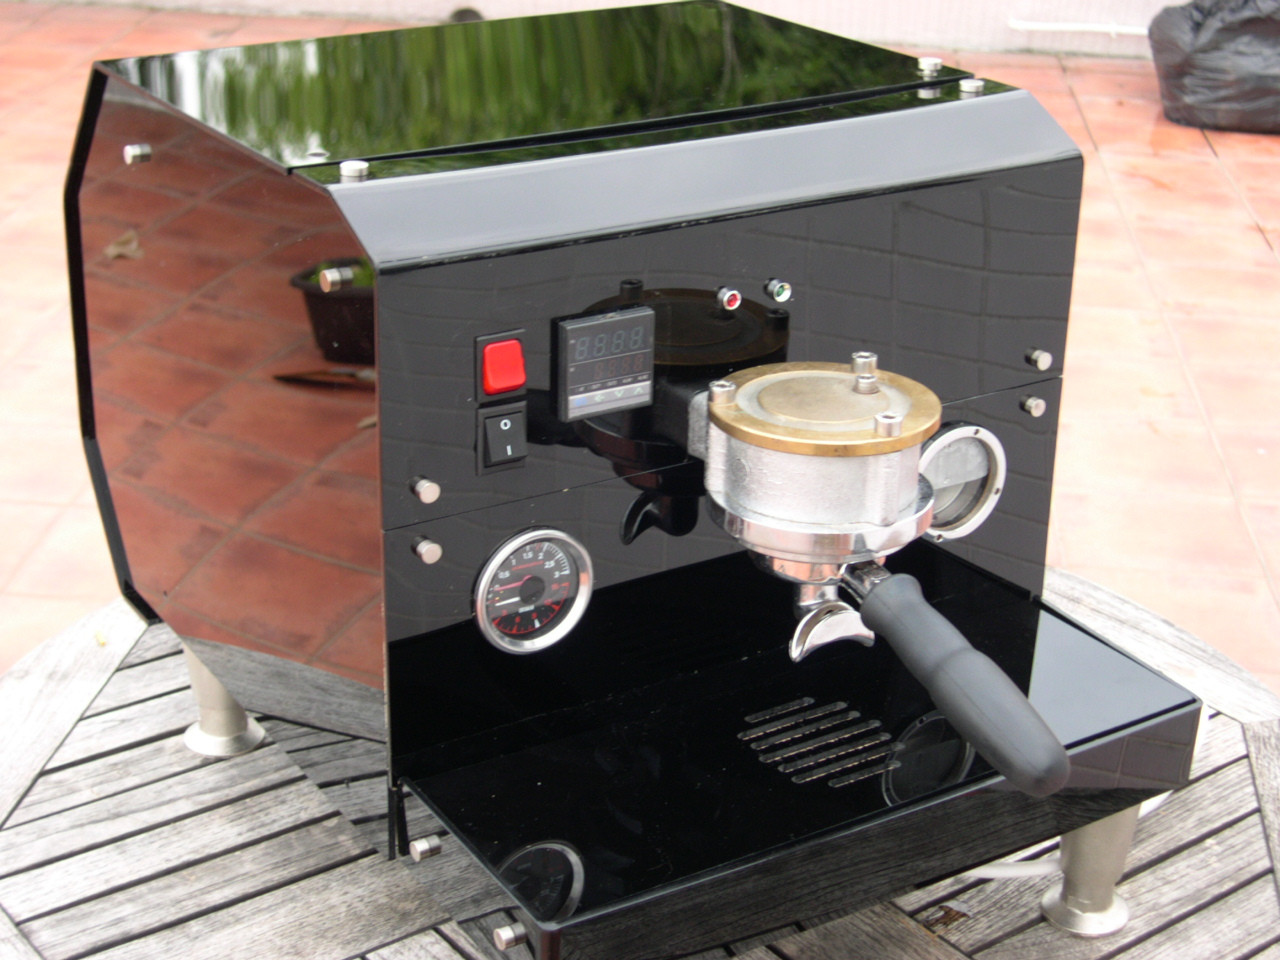 Best ideas about DIY Espresso Machine
. Save or Pin DIY Home made espresso machines Now.